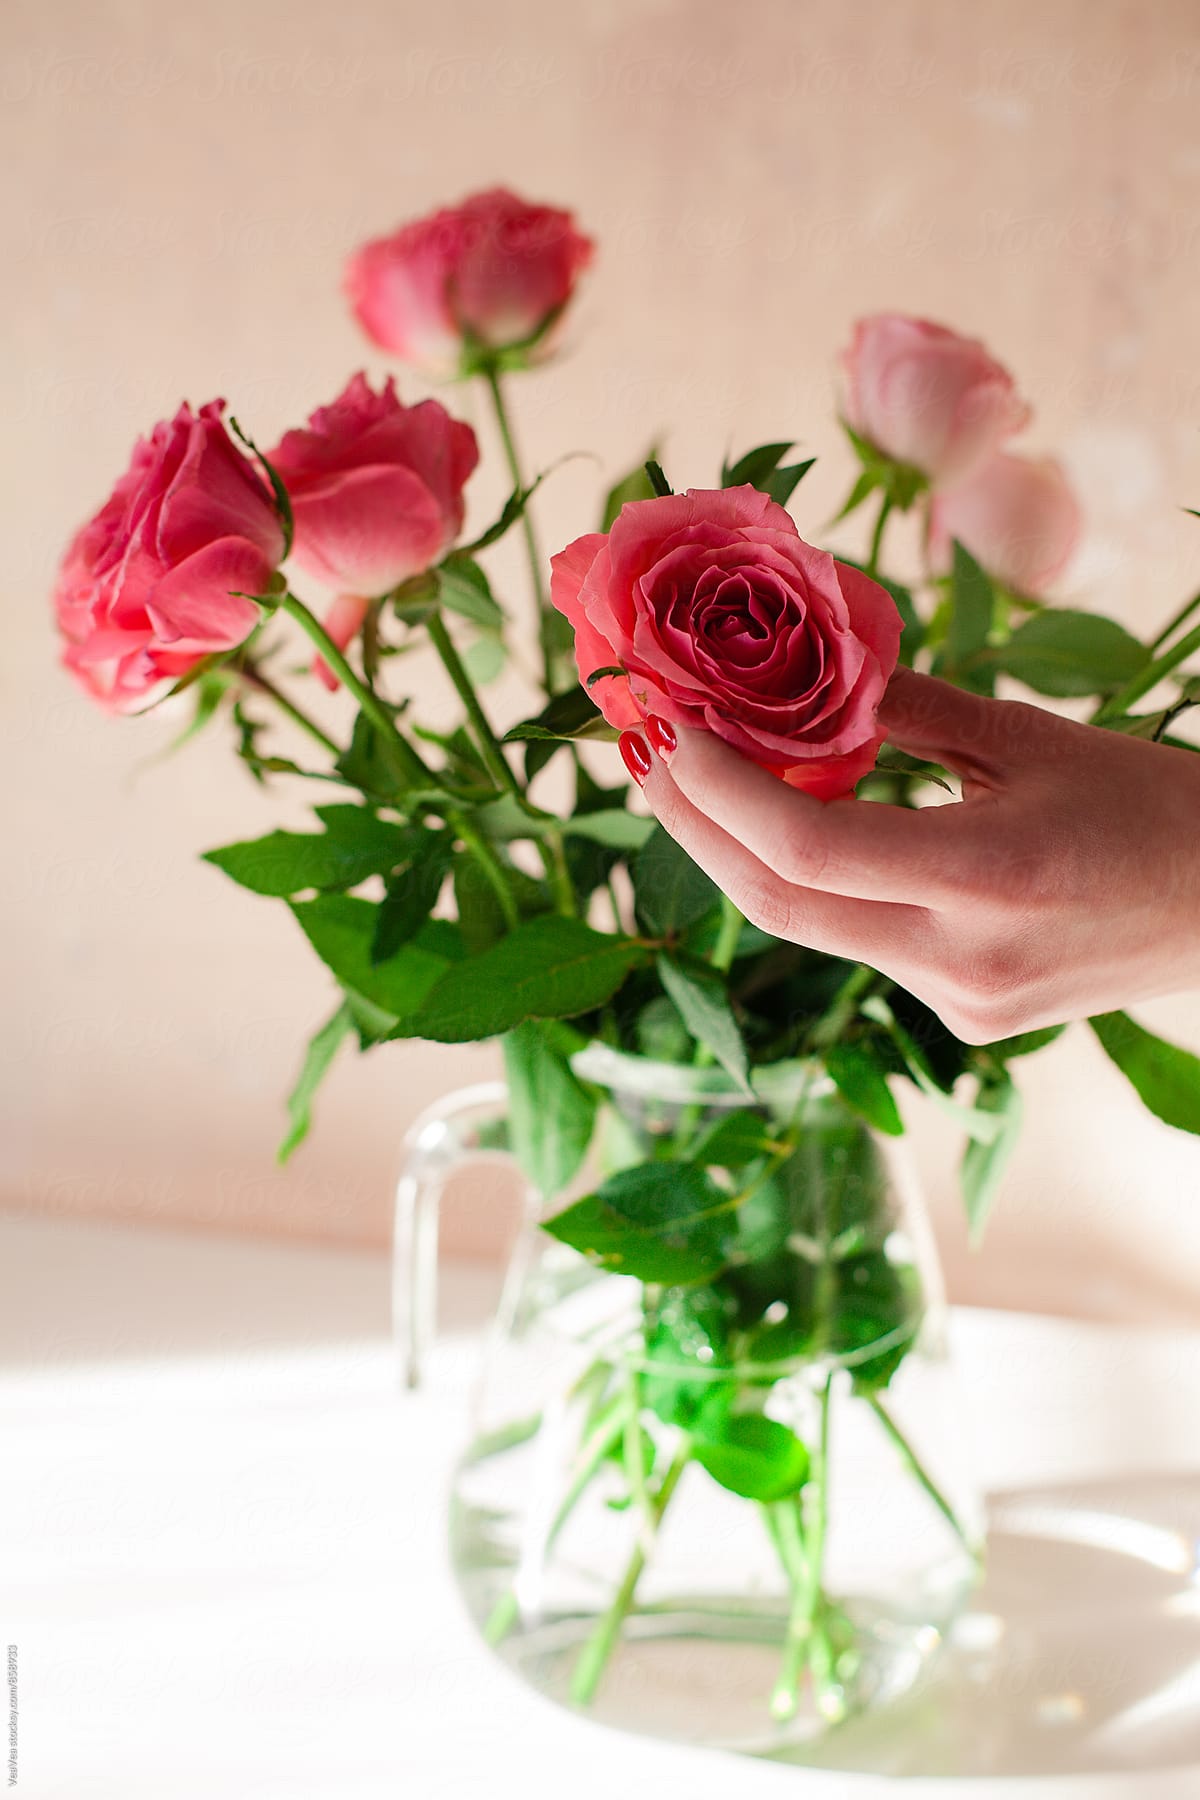 Female hands arranging a bouquet of roses indoor